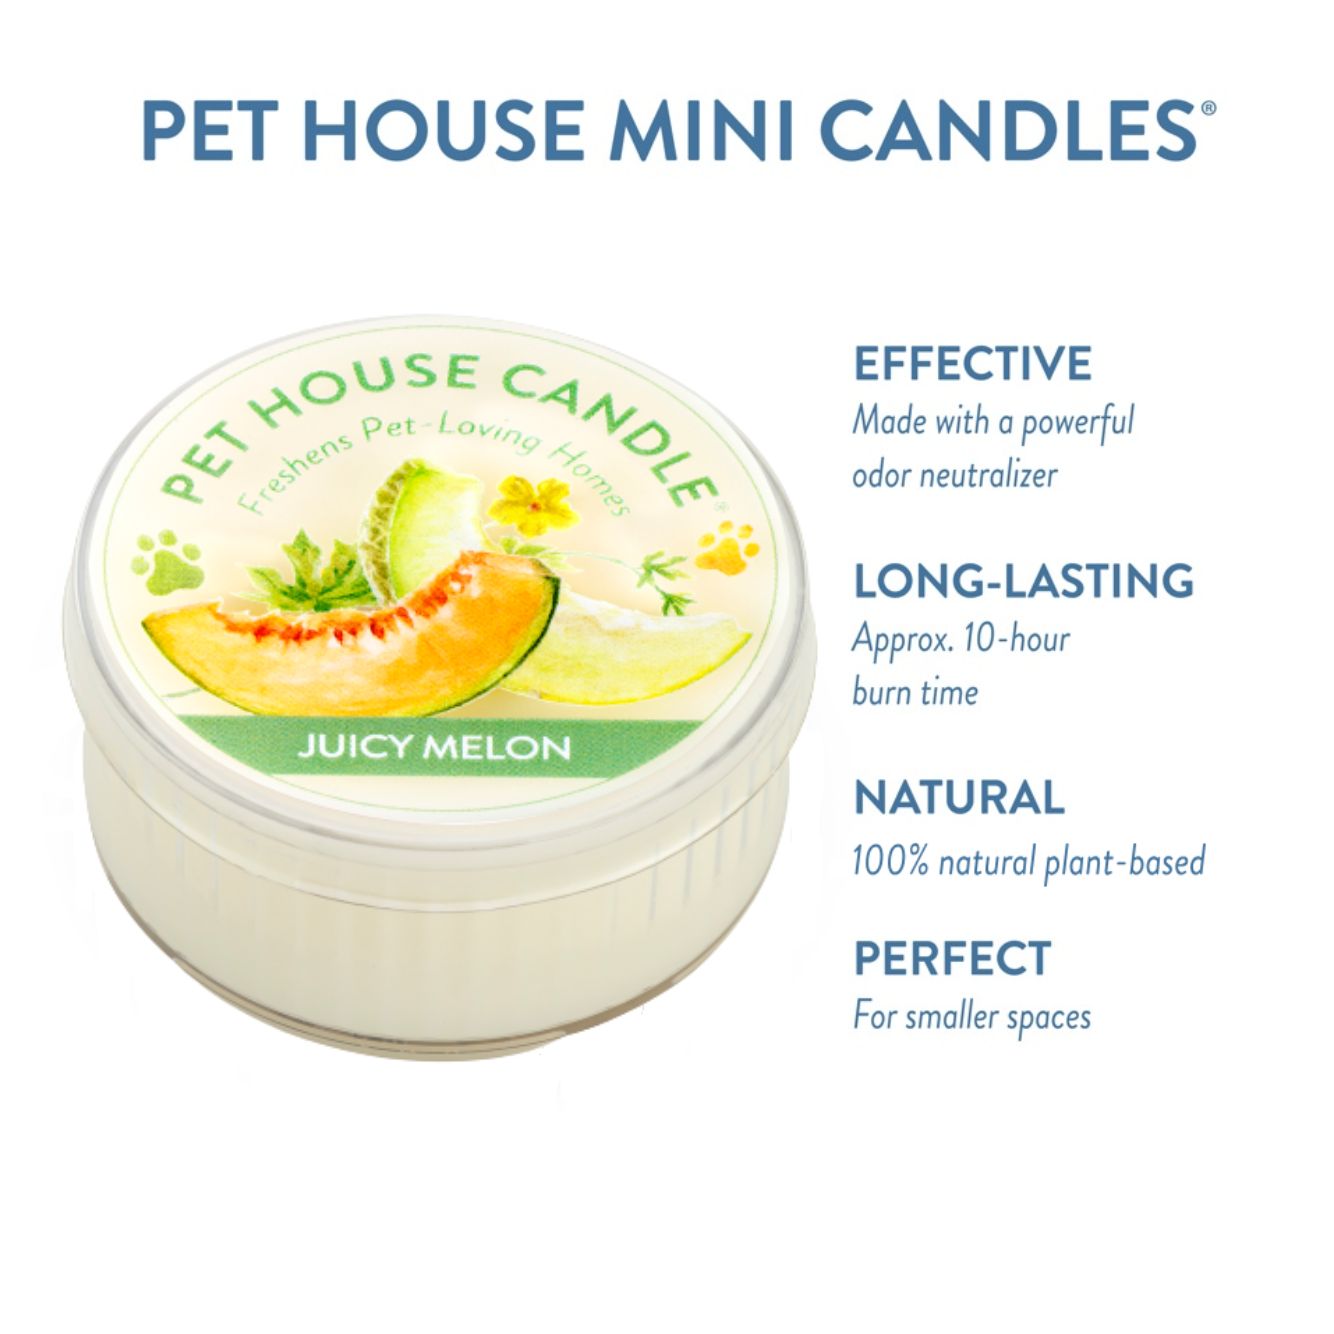 Juicy Melon Mini Candle infographics